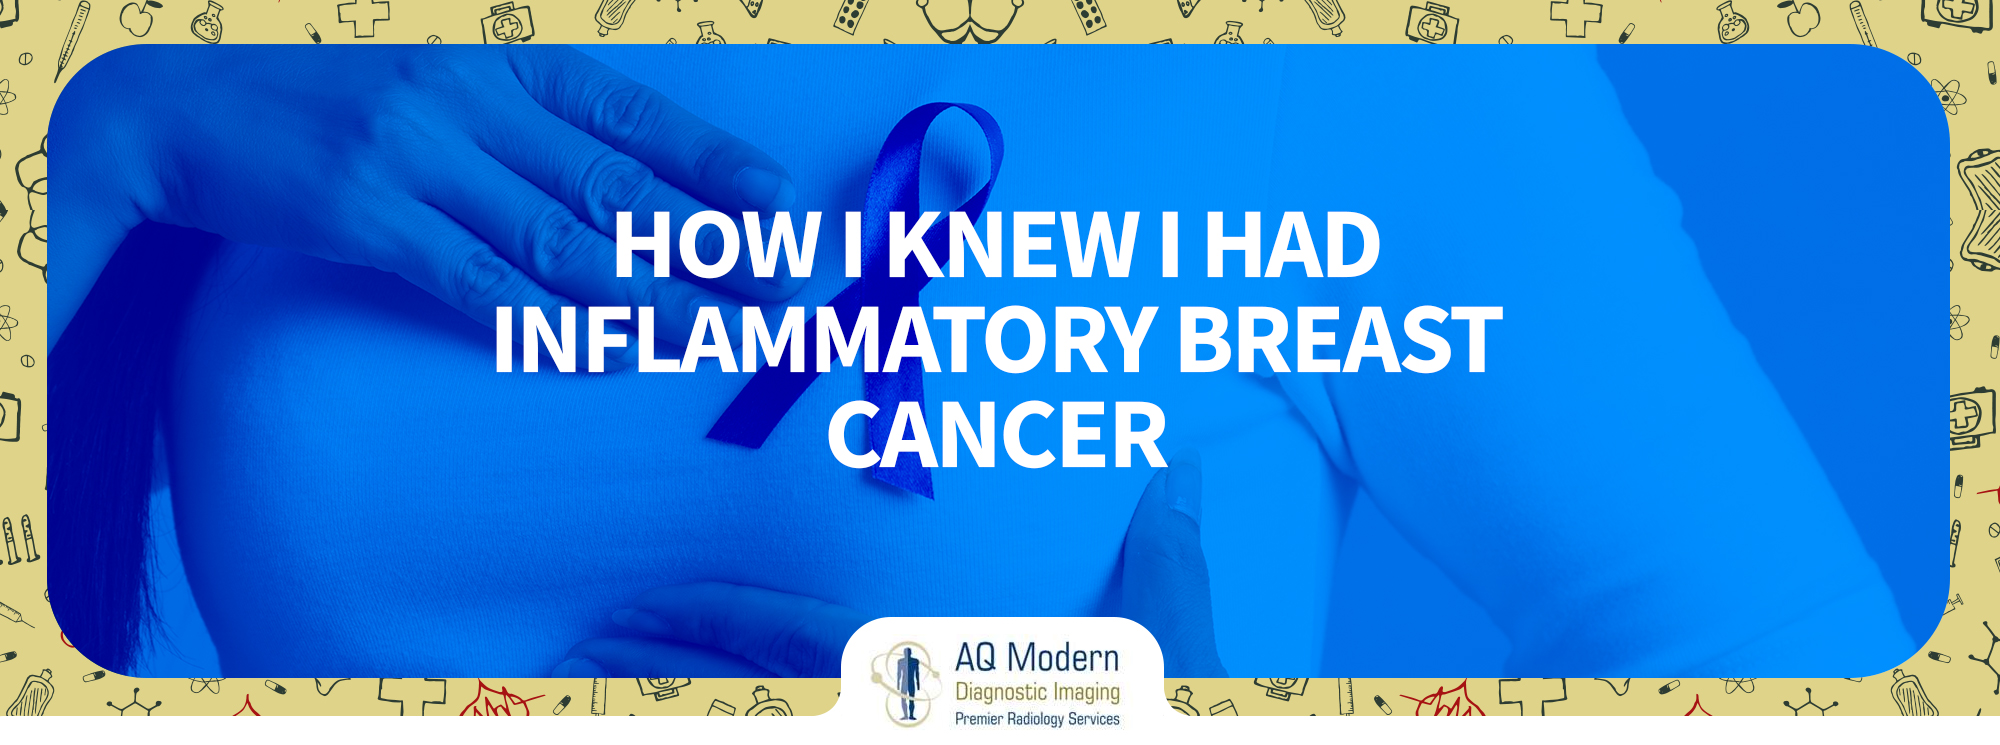 How I Knew I Had Inflammatory Breast Cancer